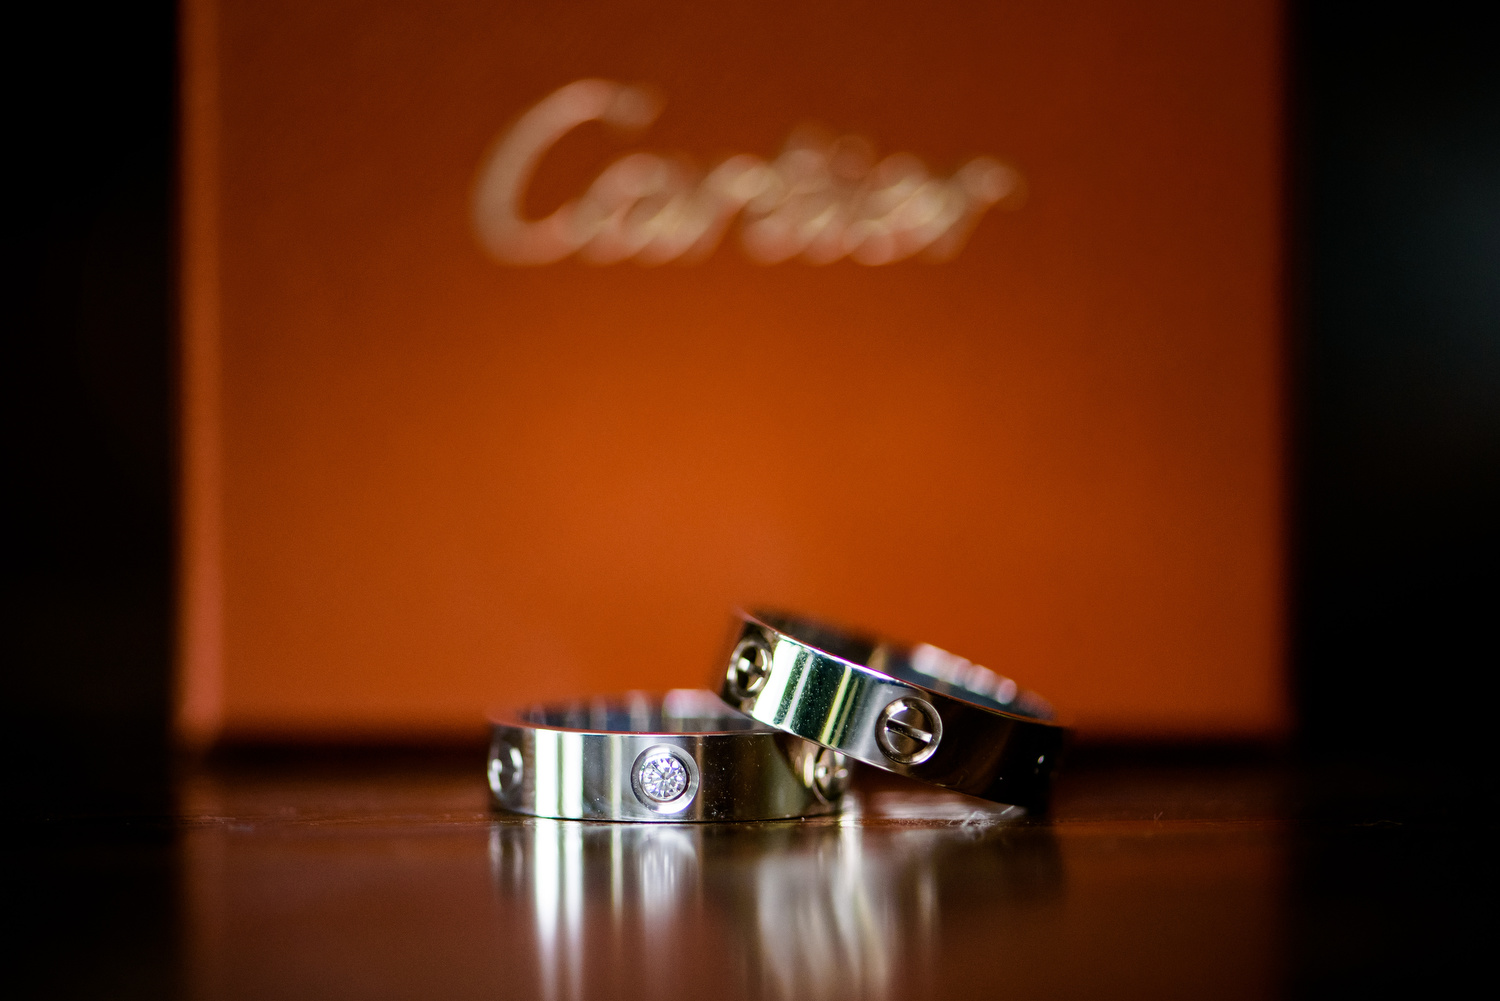 Cartier ring detail photo at Heritage Prairie Farm wedding.  